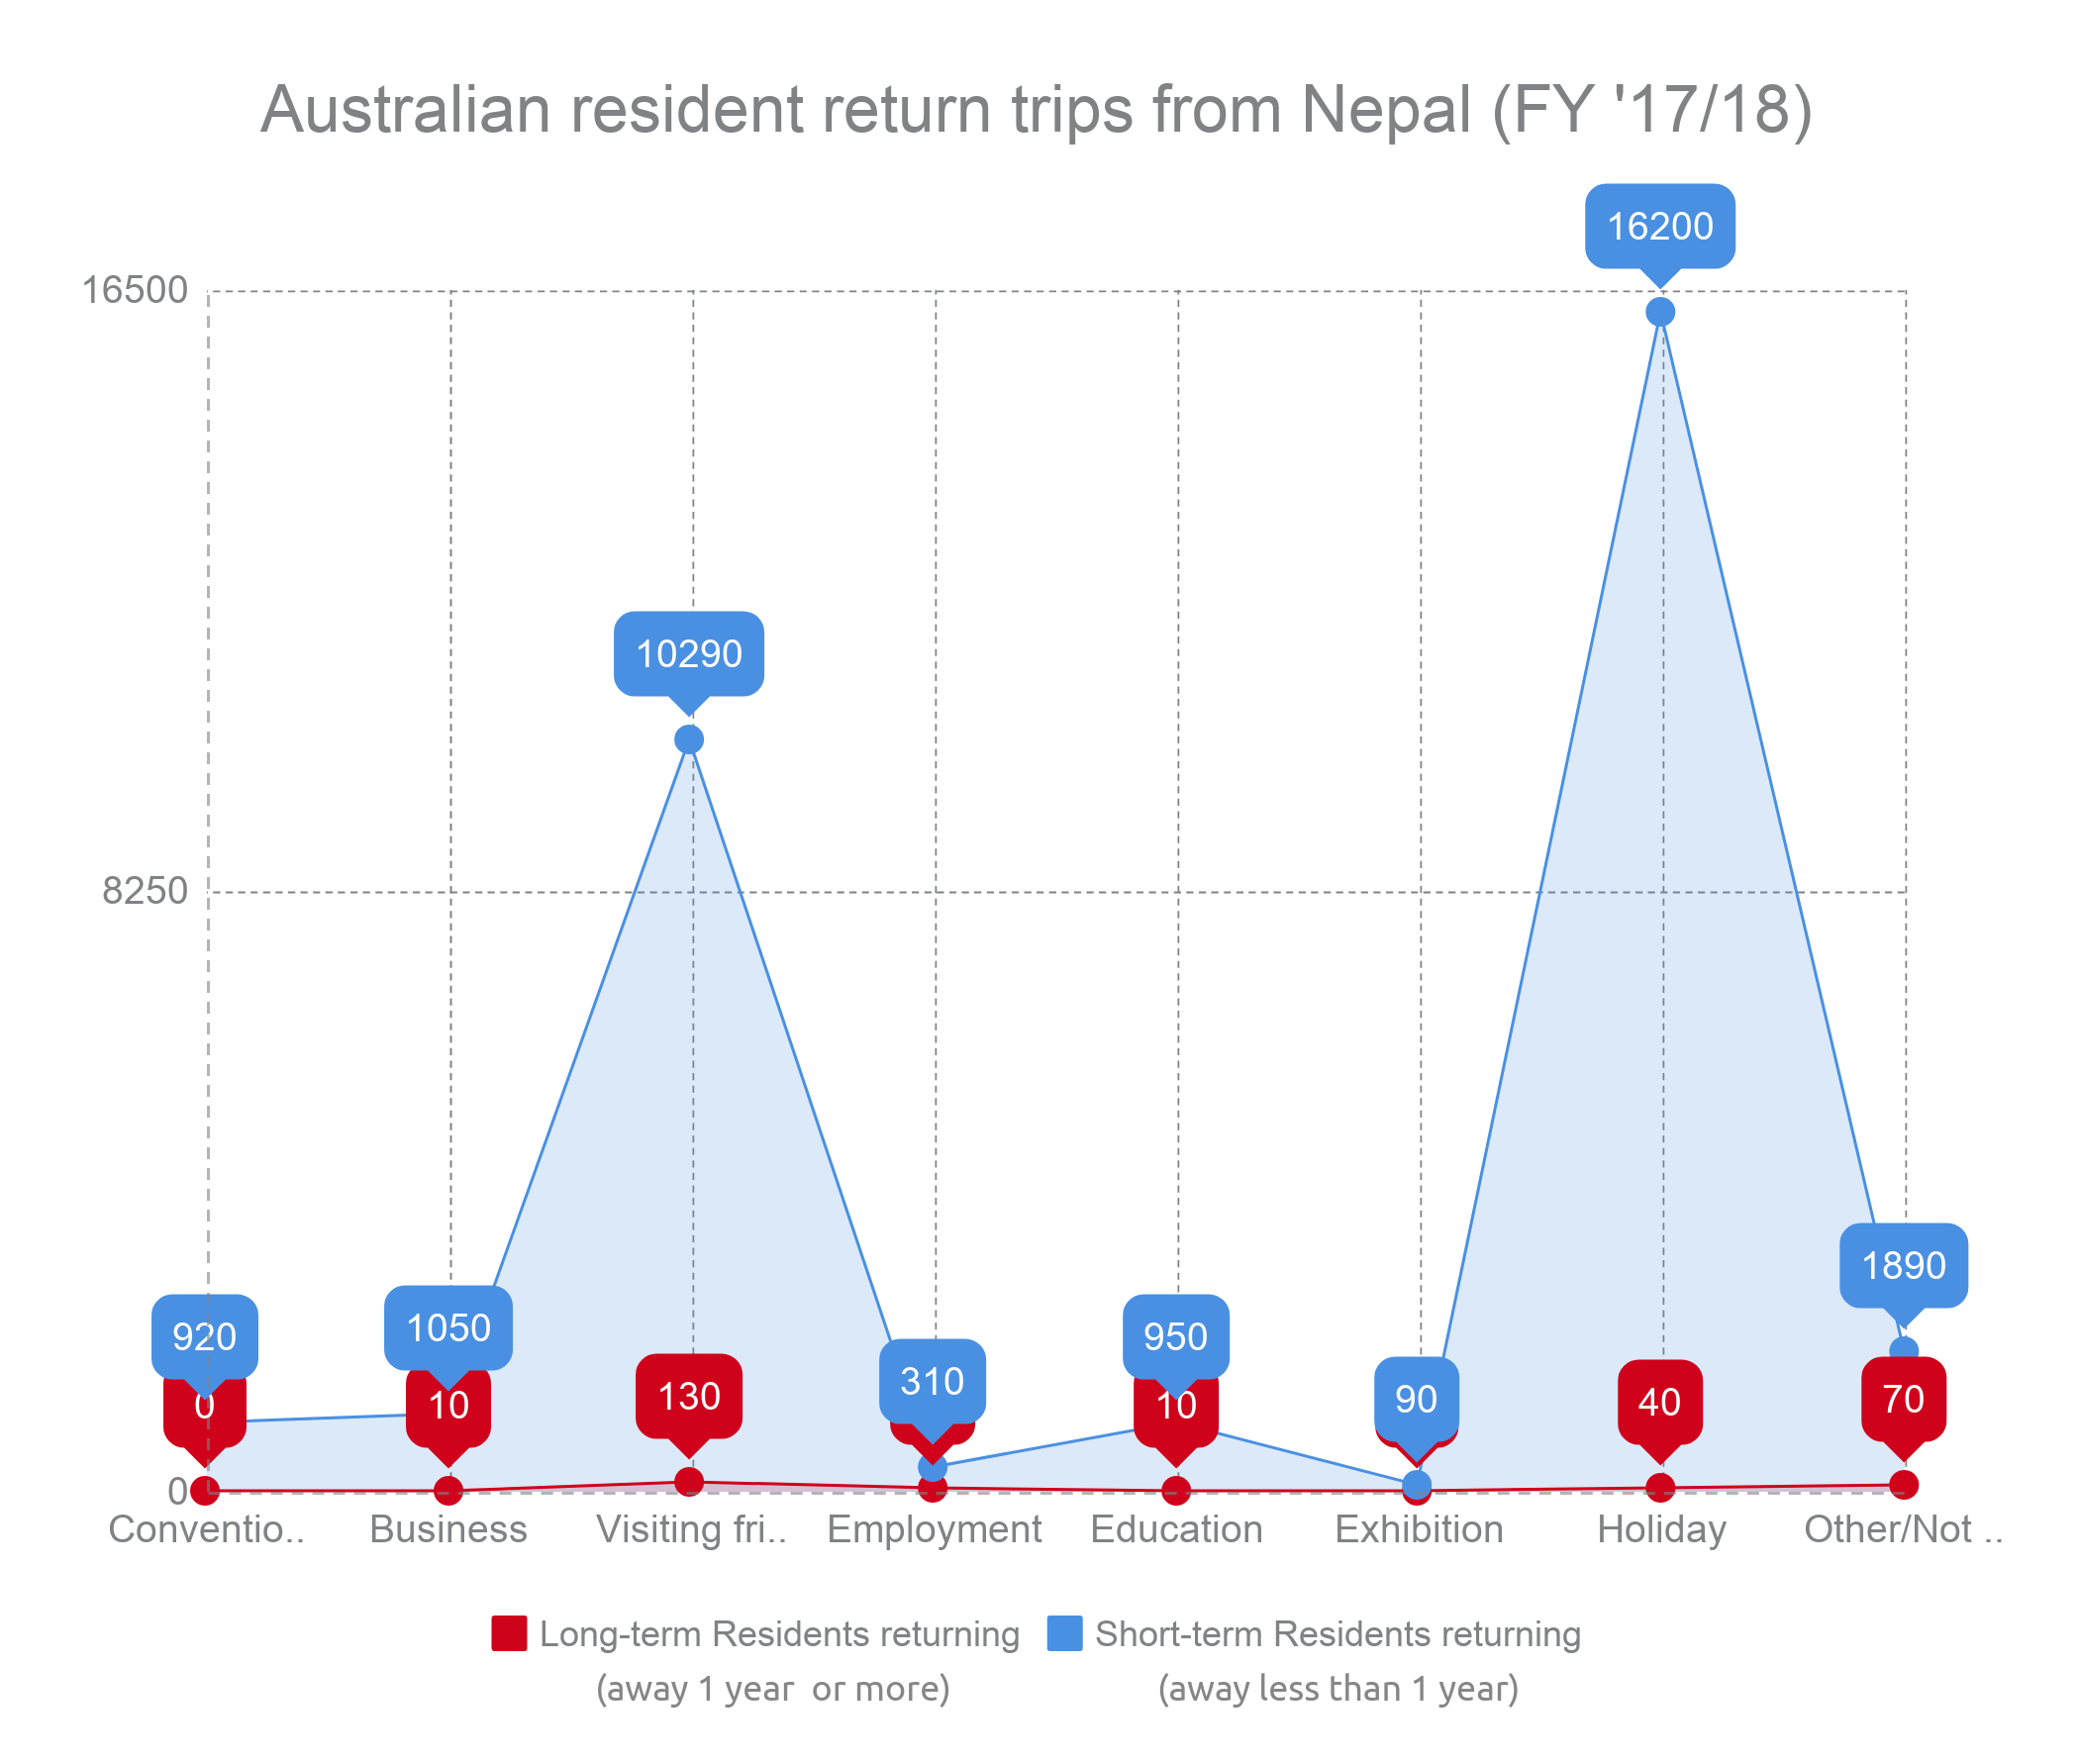 Australian visitors in Nepal for '17/18